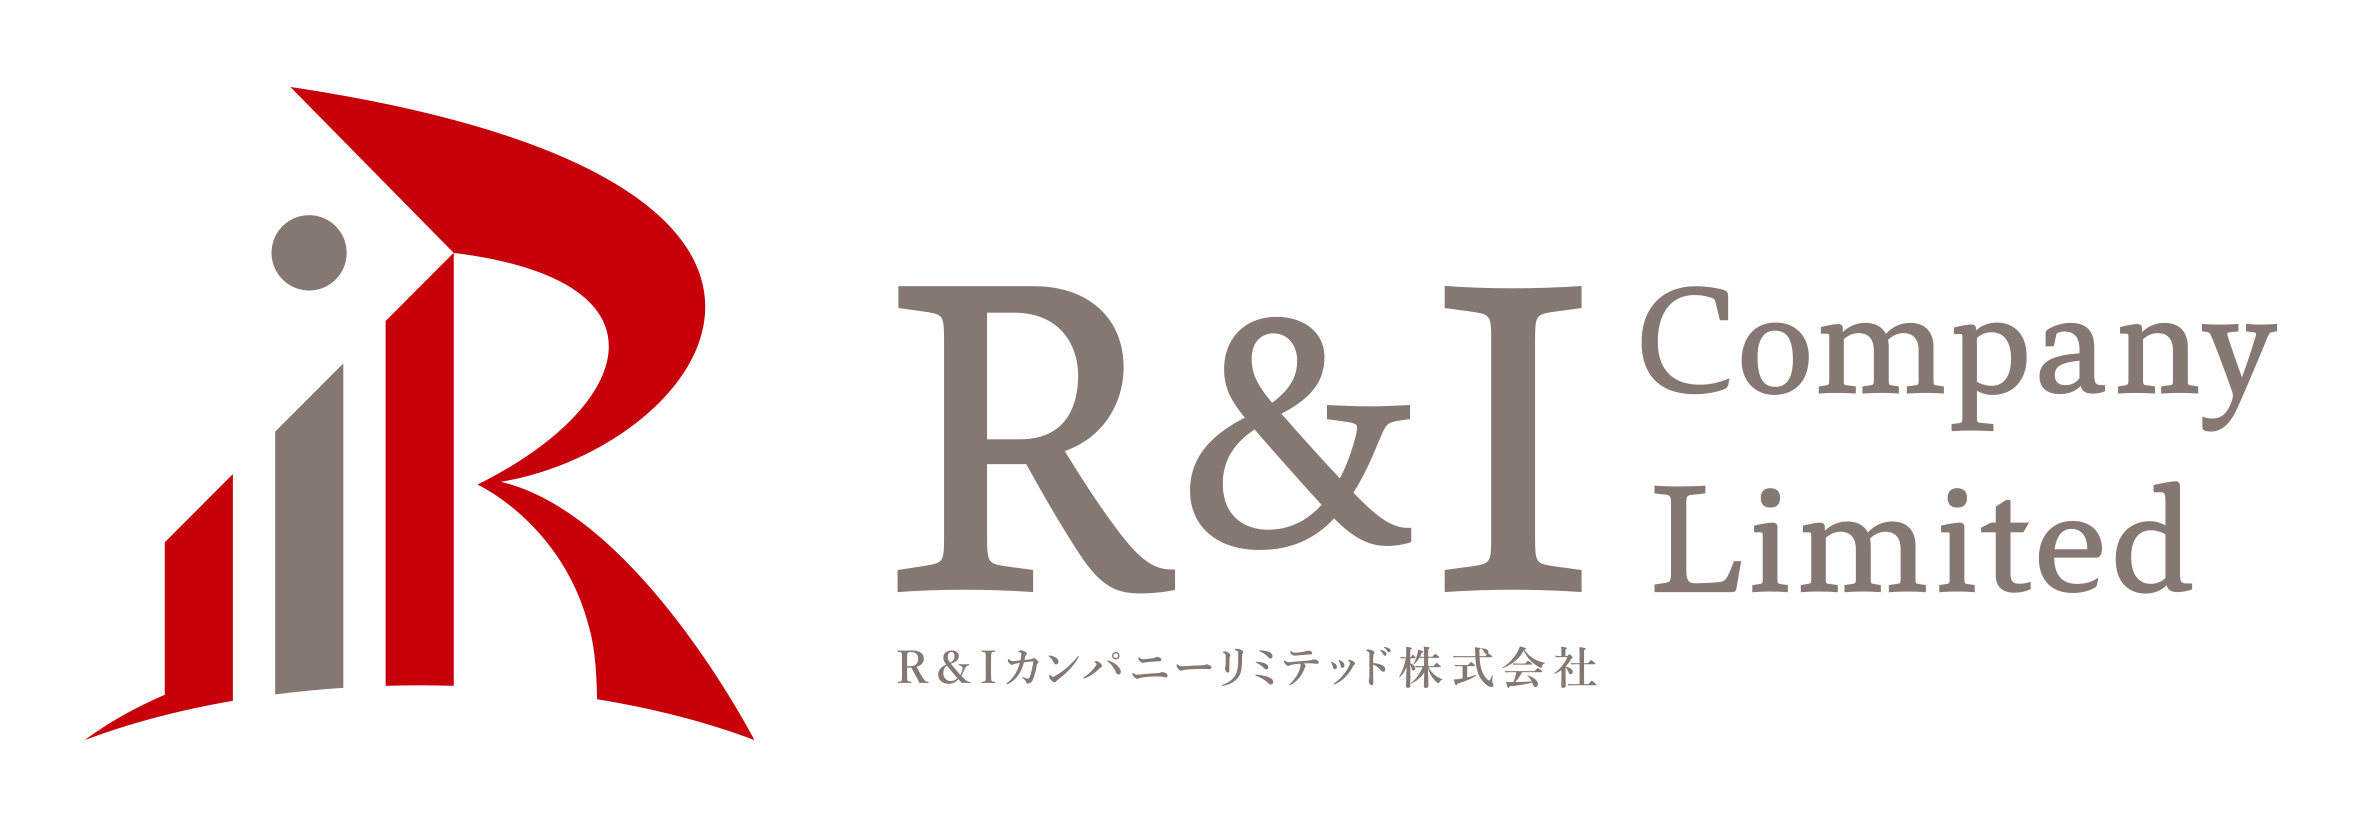 r_i_company_limited_setlogo_btype.jpg